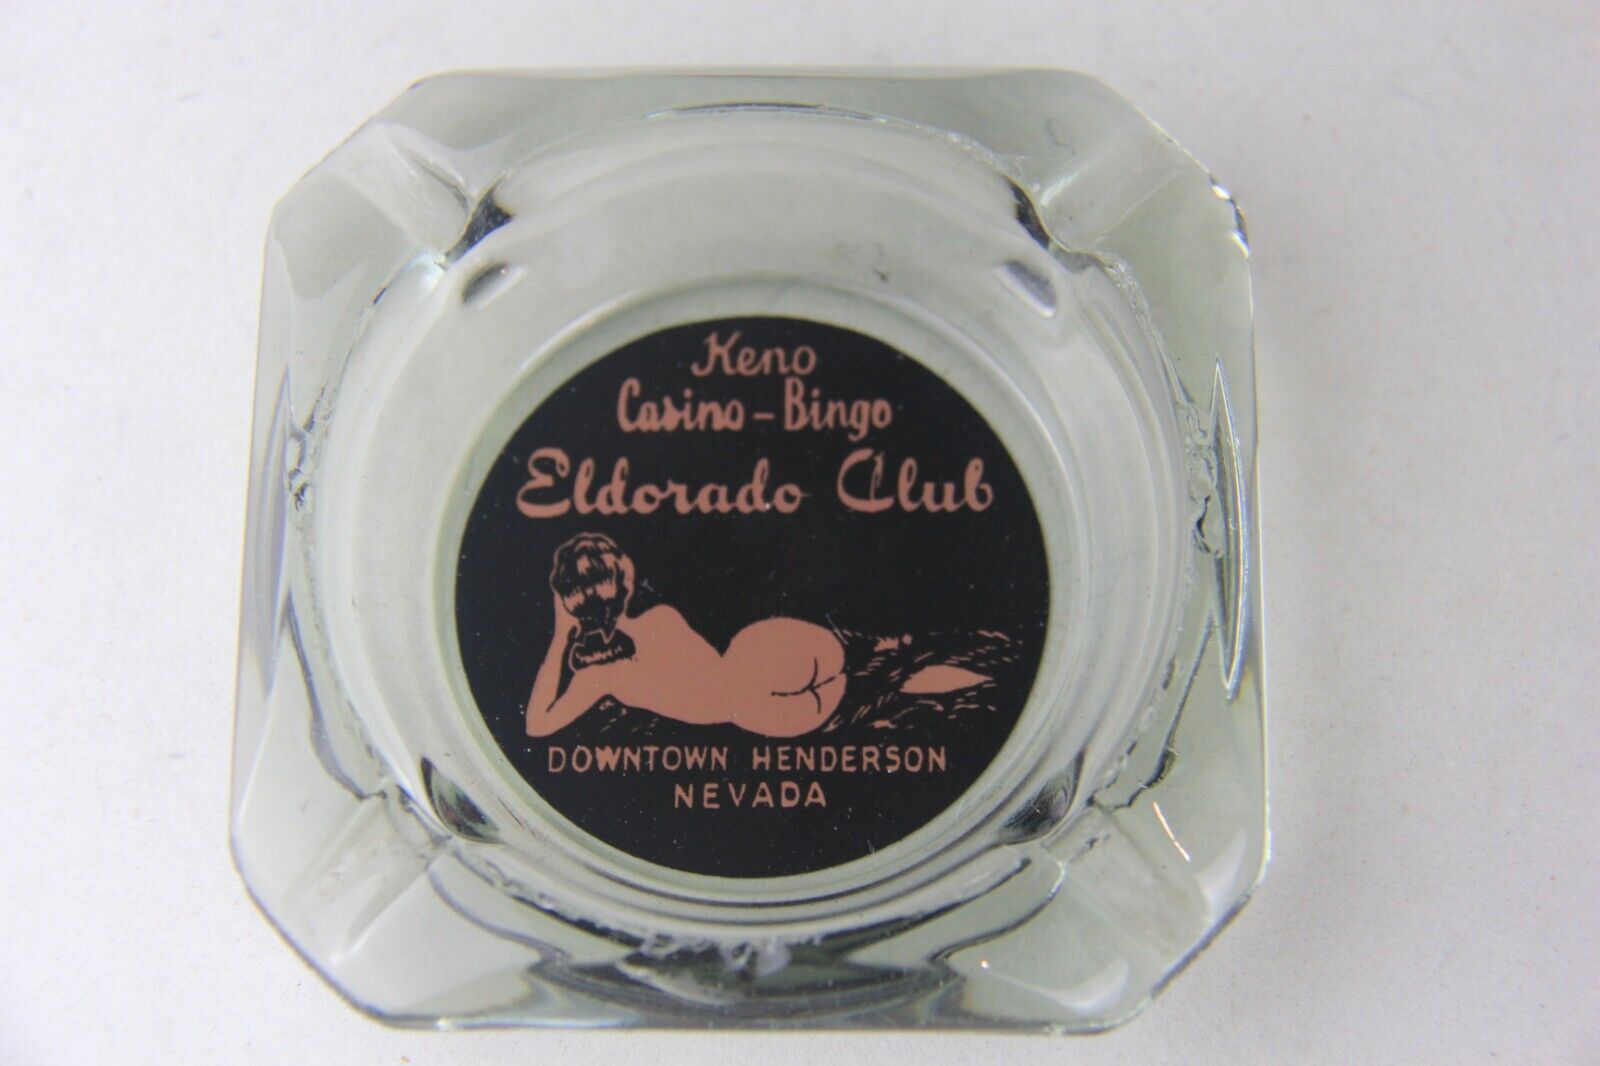 VINTAGE KENO CASINO-BINGO ELDORADO CLUB DOWNTOWN HENDERSON NEVADA GLASS ASHTRAY